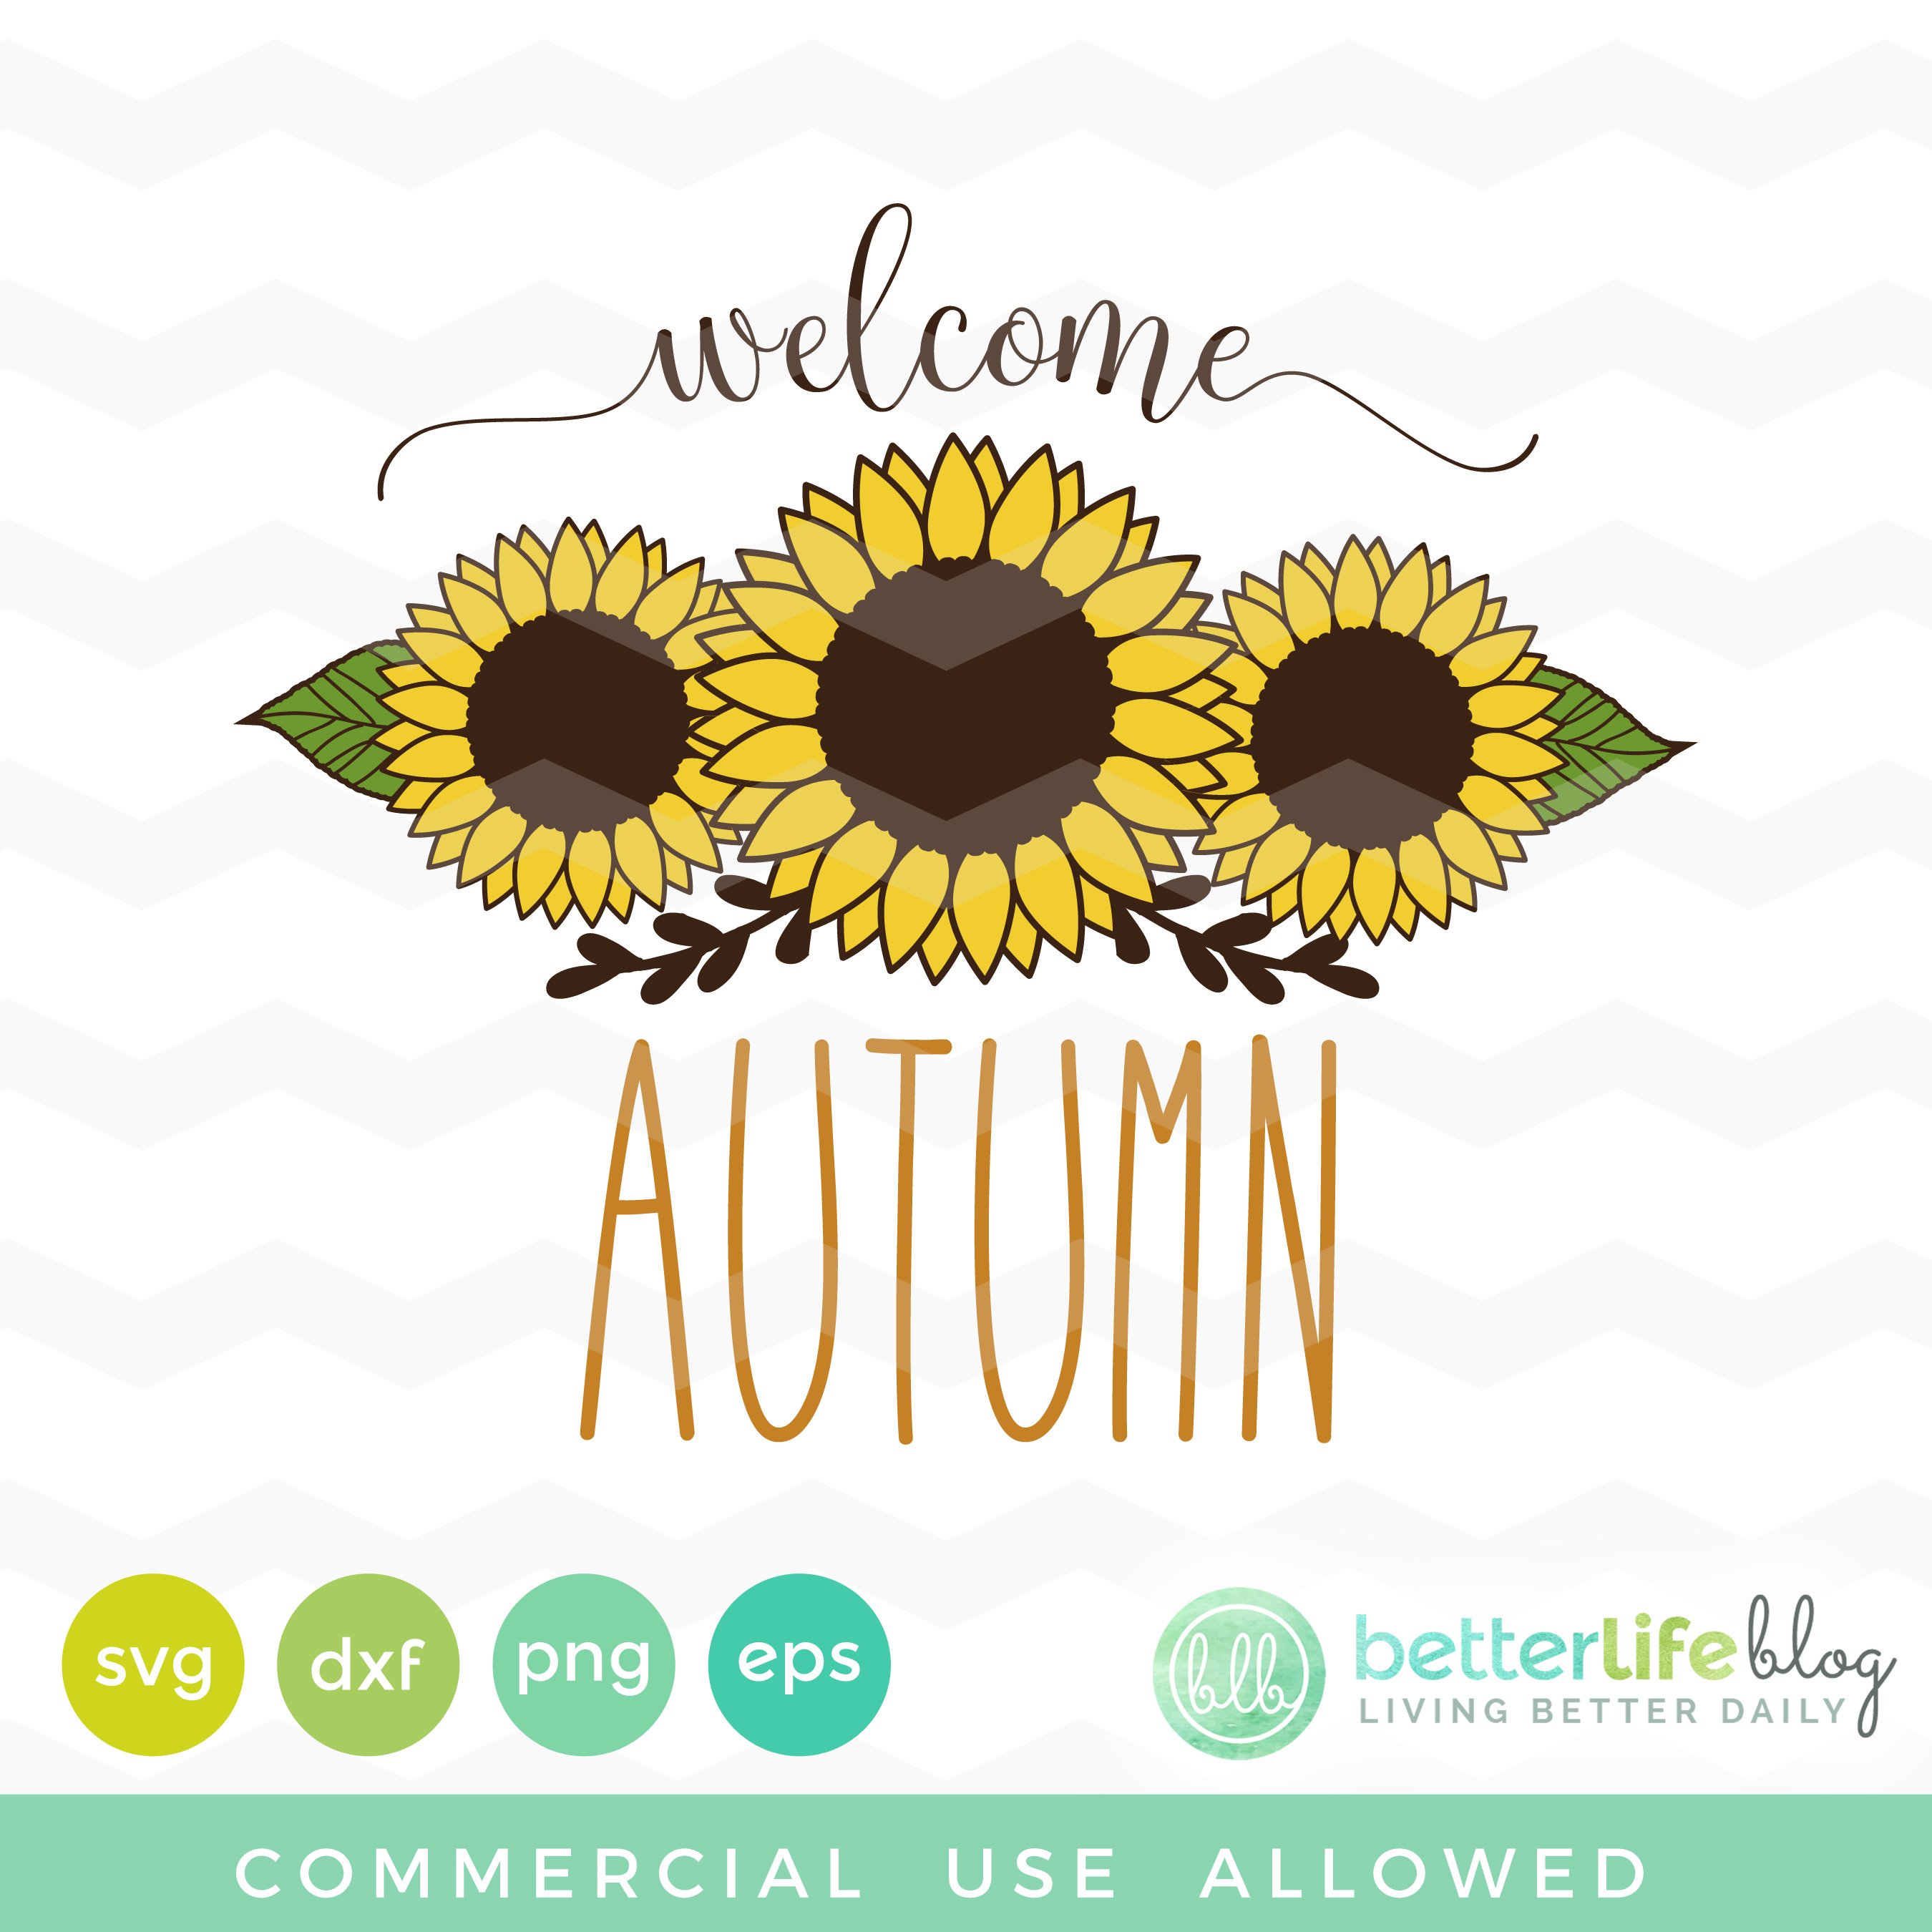 Sunflowers Welcome Autumn SVG - Better Life Blog